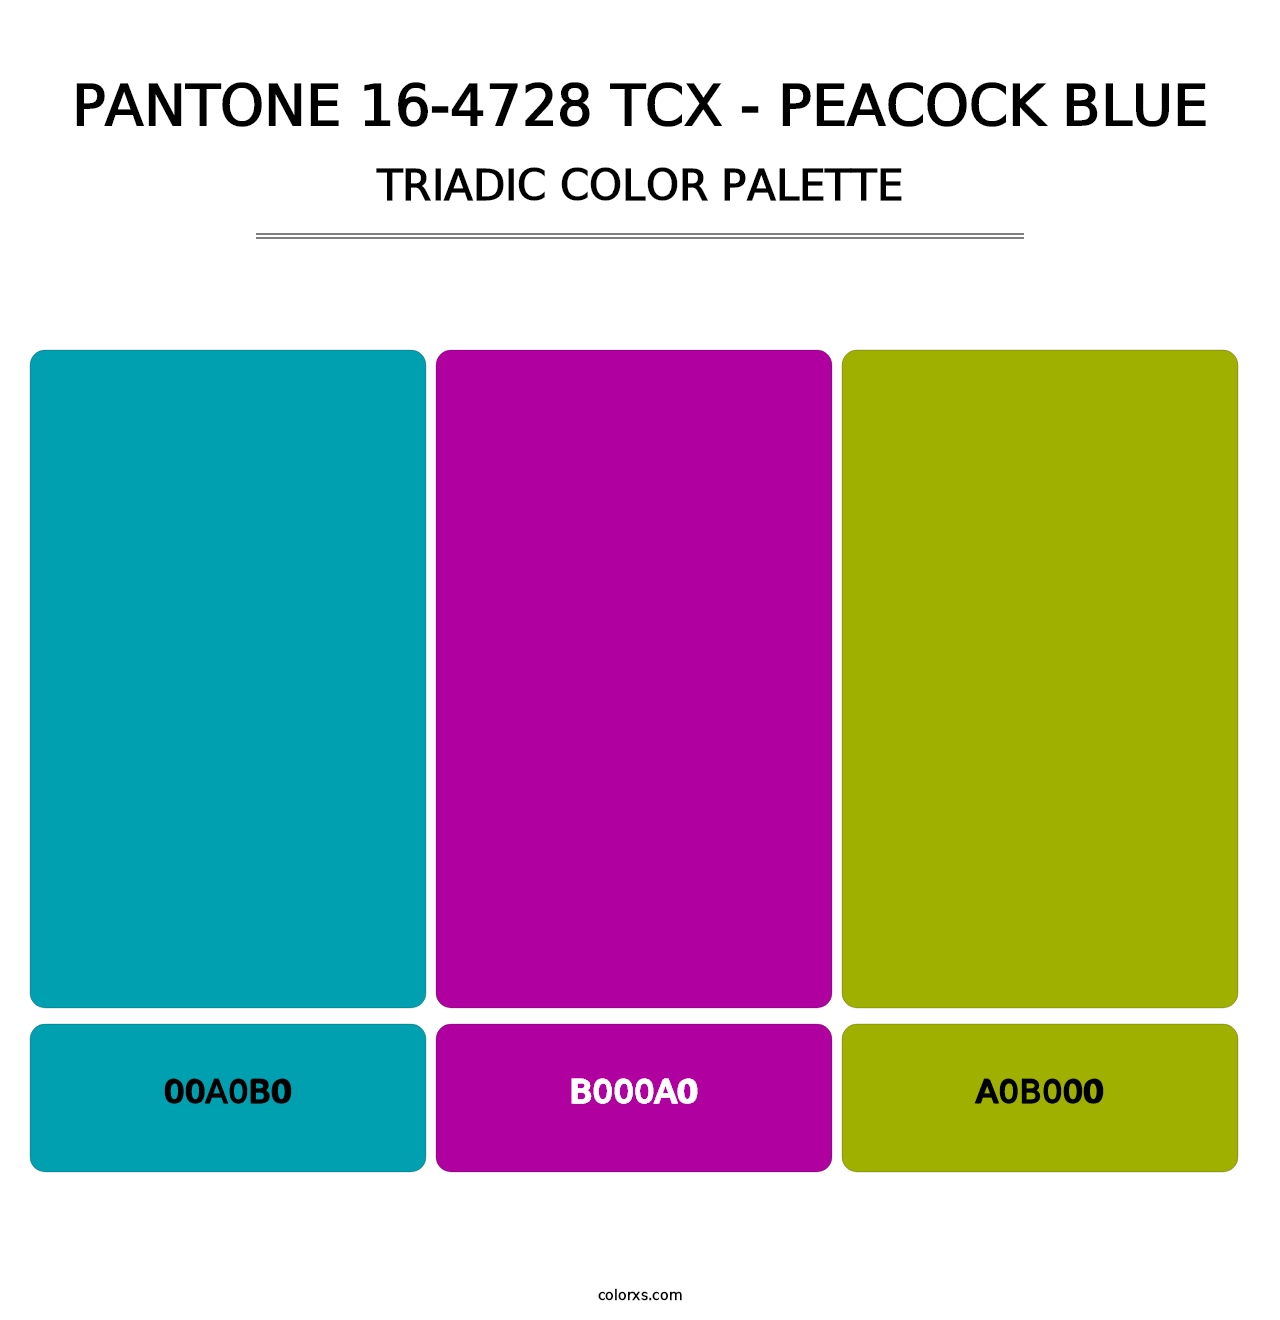 PANTONE 16-4728 TCX - Peacock Blue - Triadic Color Palette